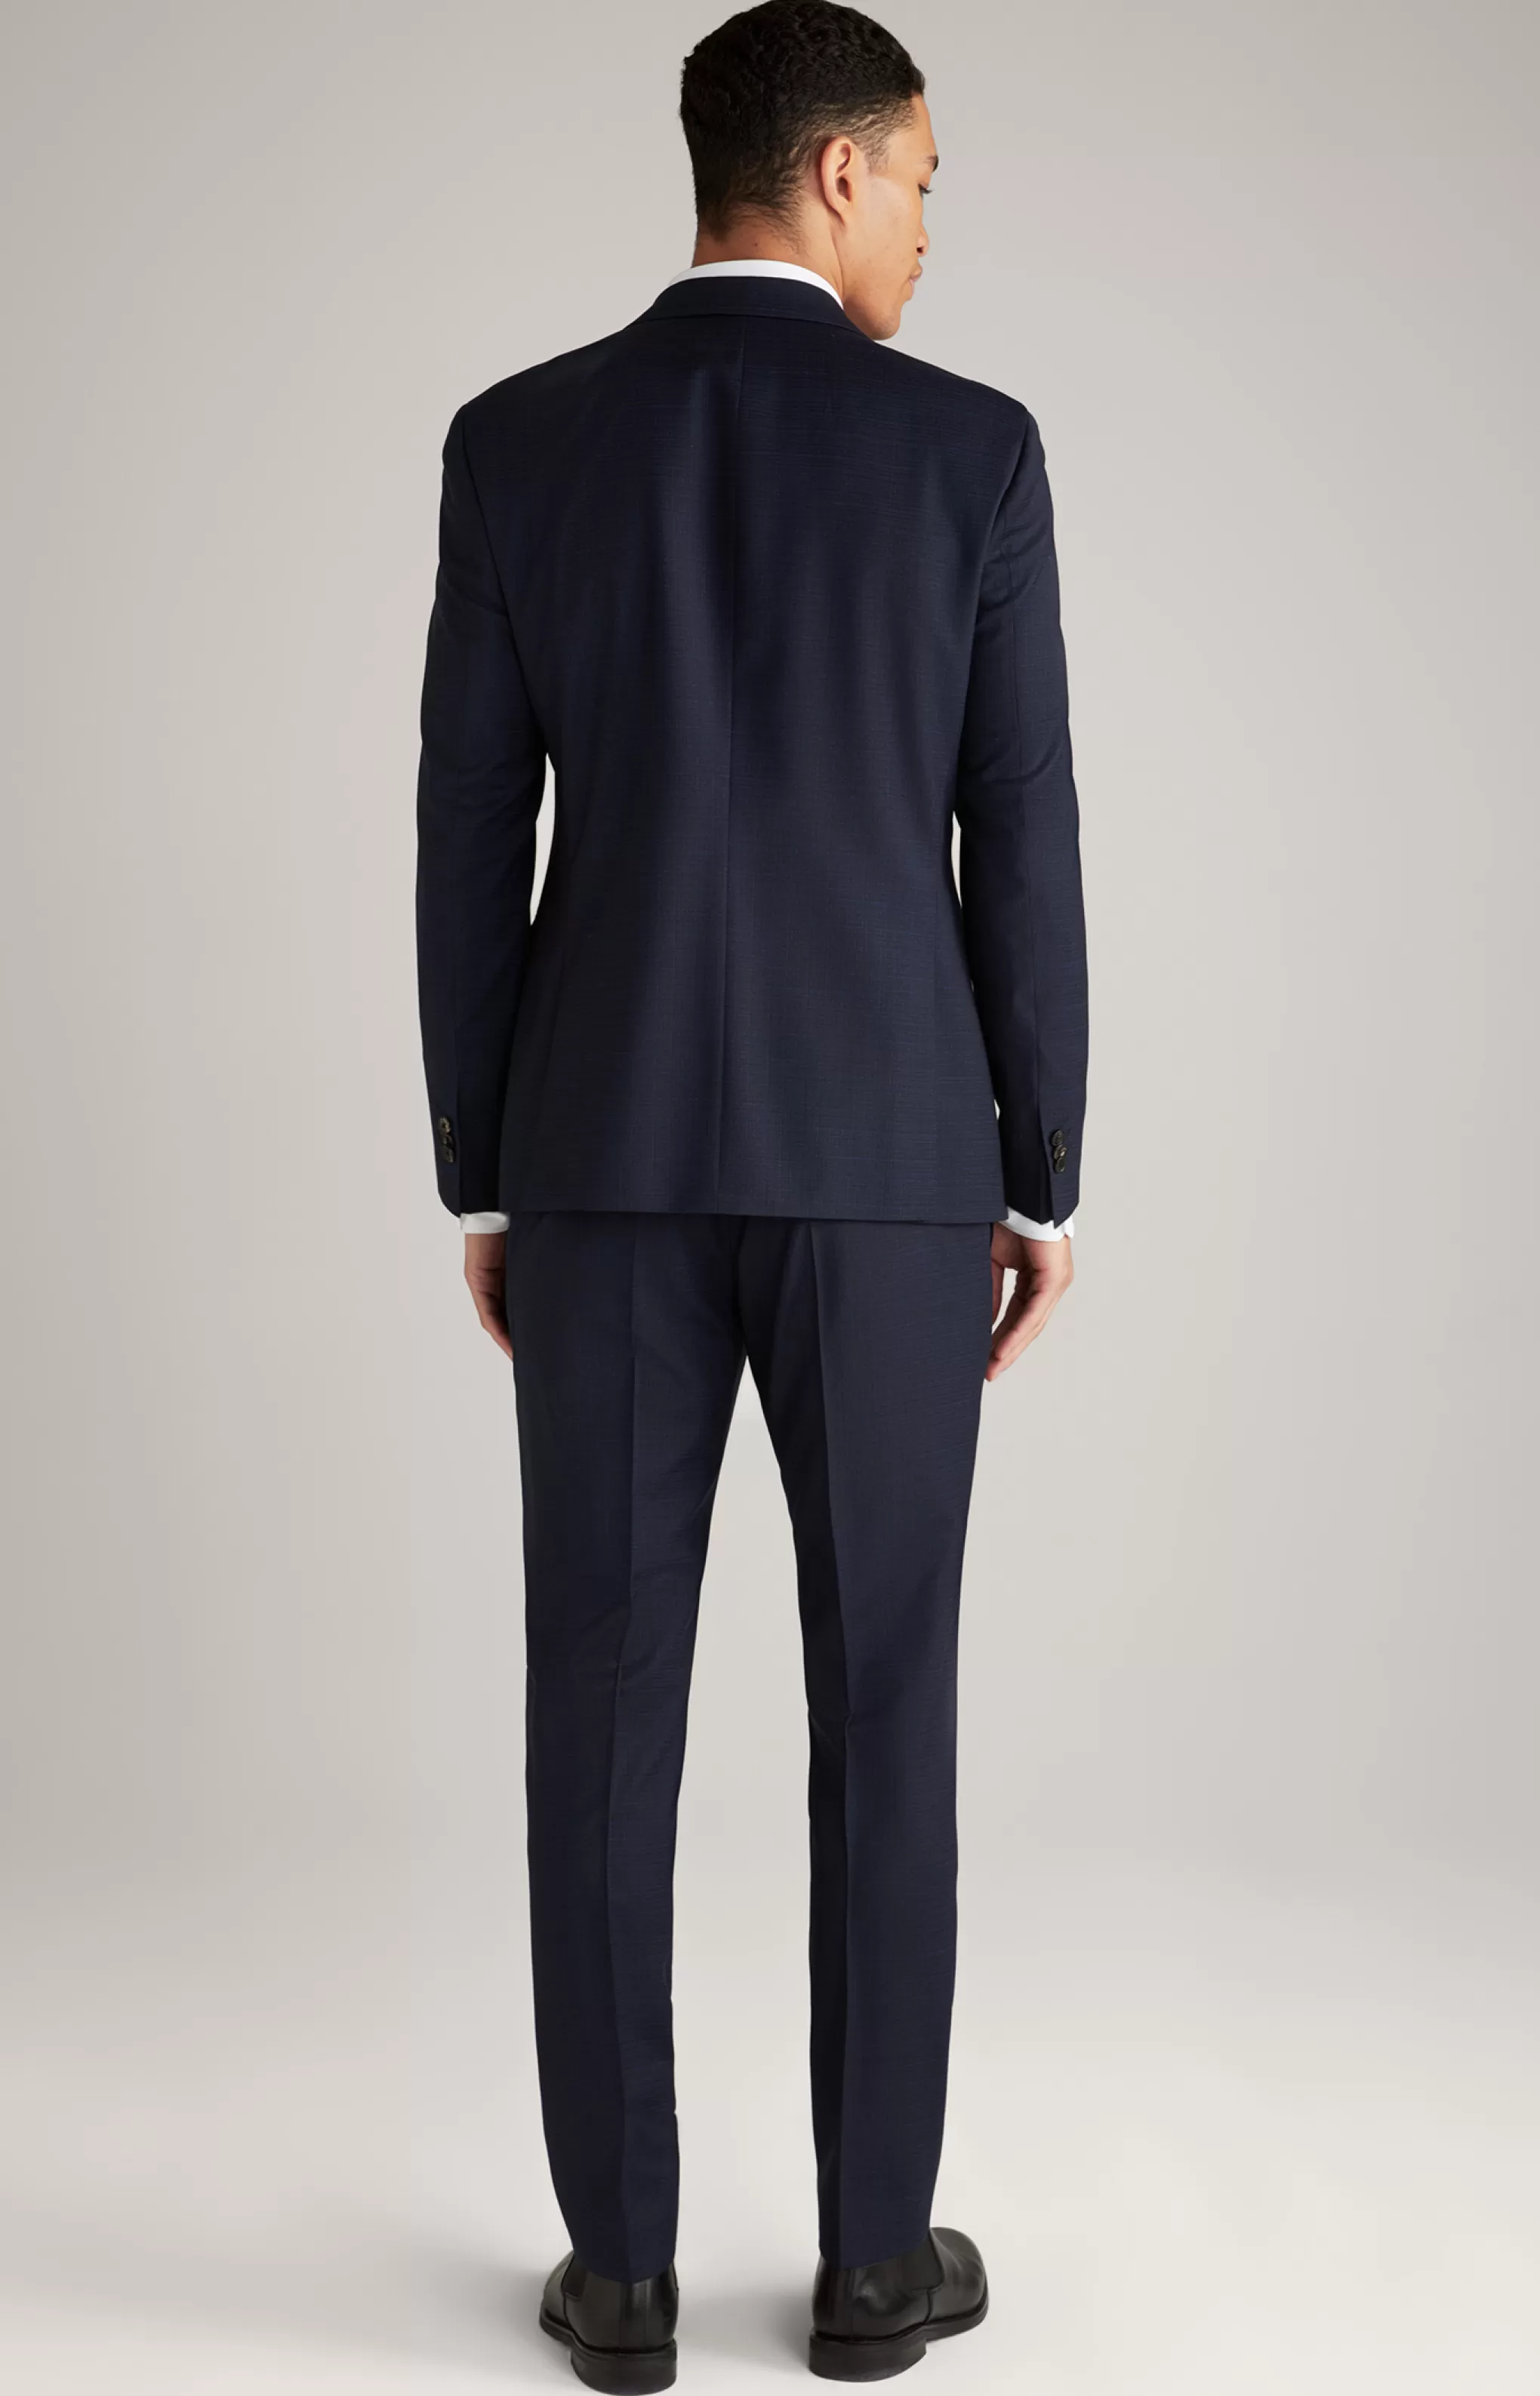 Suits | Clothing*JOOP Suits | Clothing Damon-Gun Suit in Dark Blue mélange